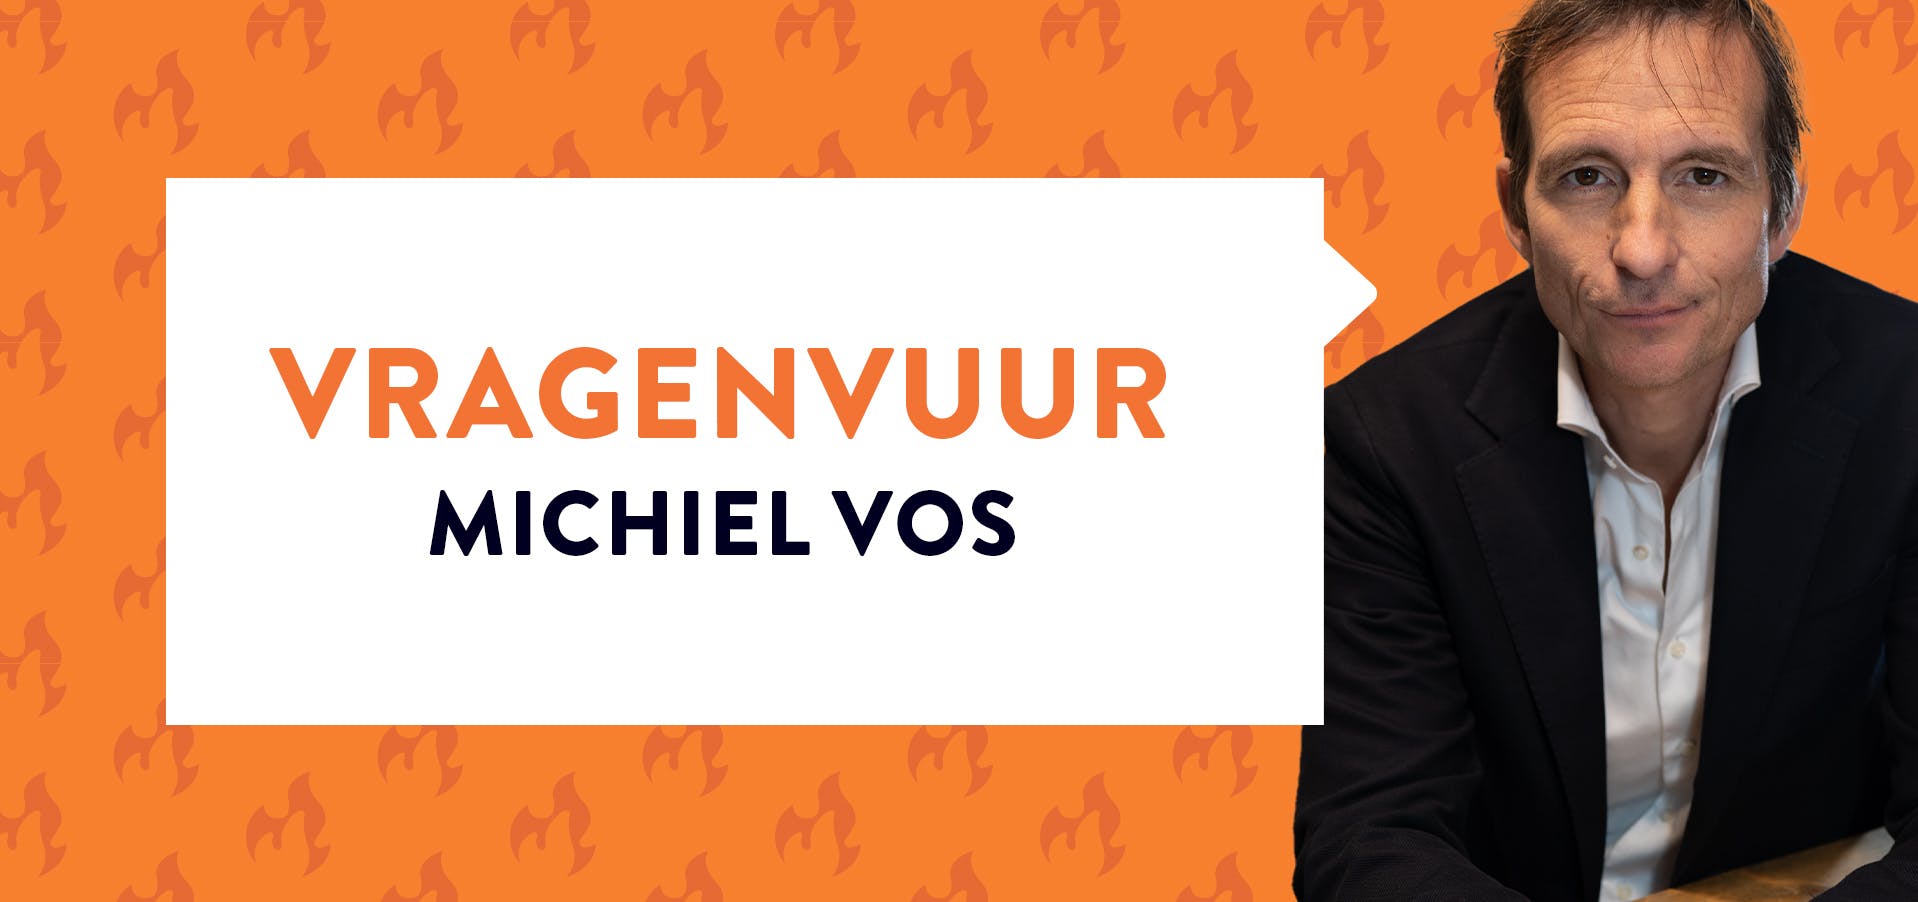 Michiel Vos poserend in zwart pak bij oranje achtergrond met tekst 'Vragenvuur michiel vos'